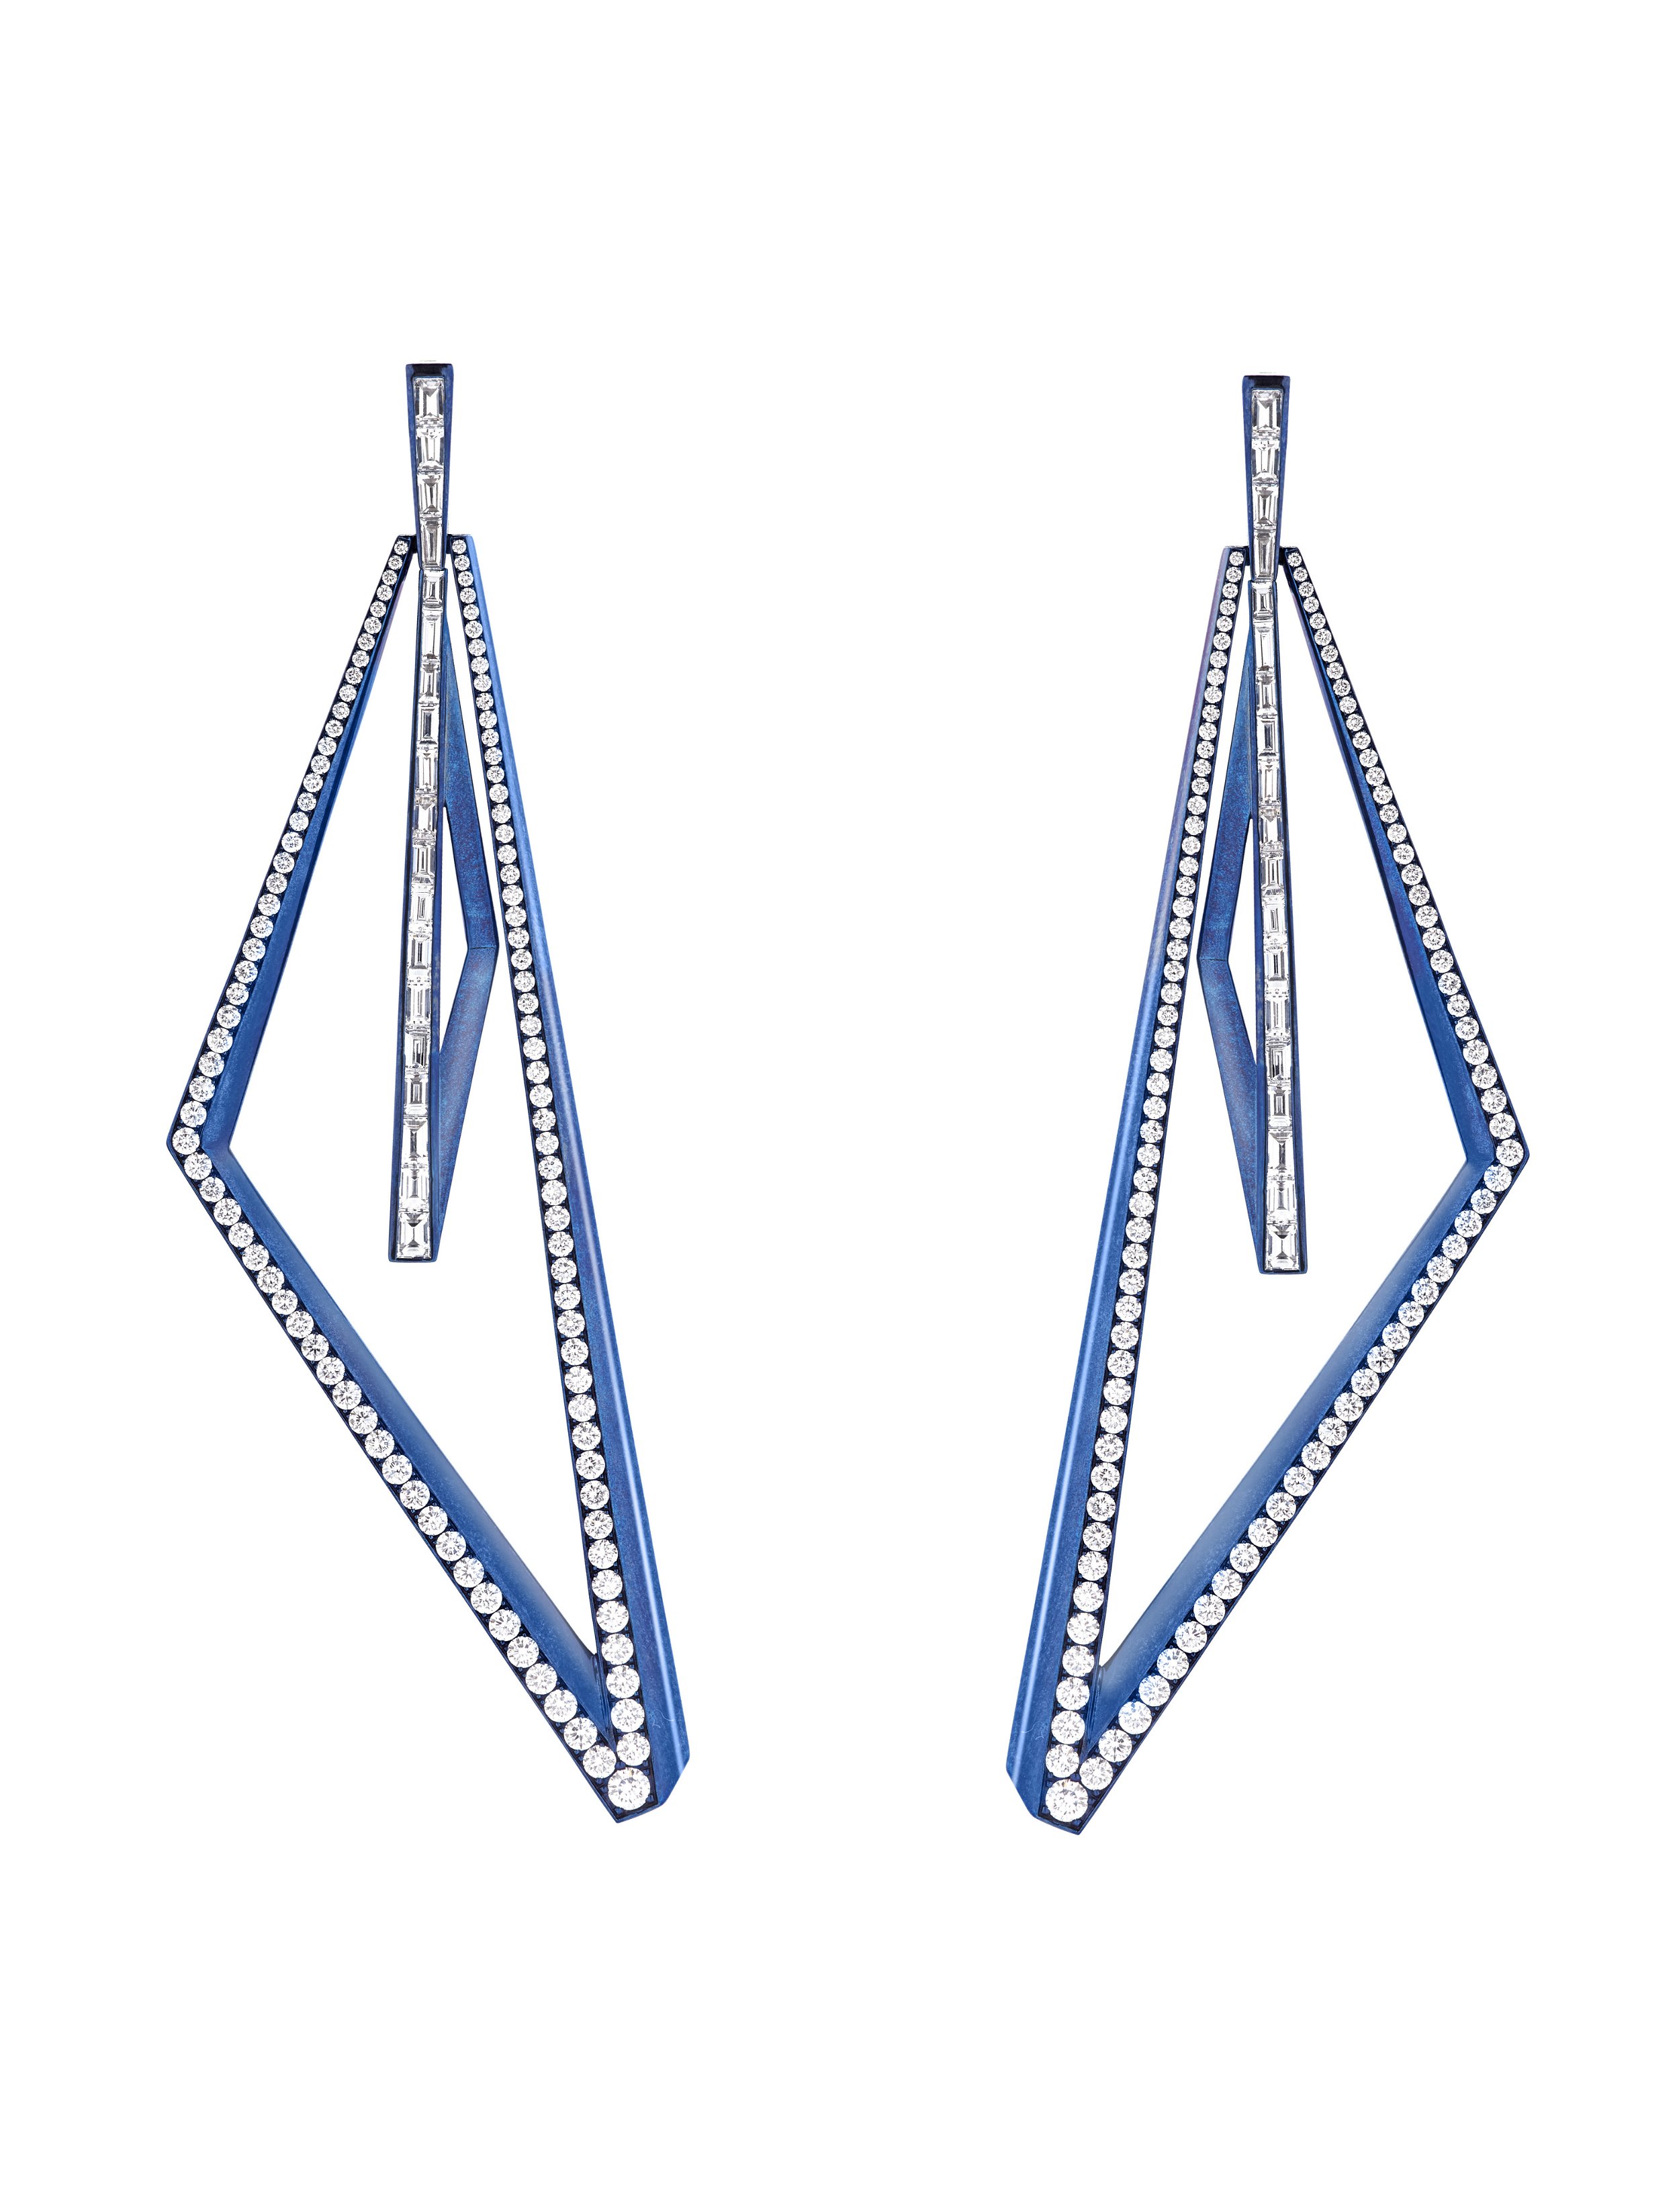 Vertigo Very Obtuse Hoop Earrings with White Diamonds in Blue Titanium